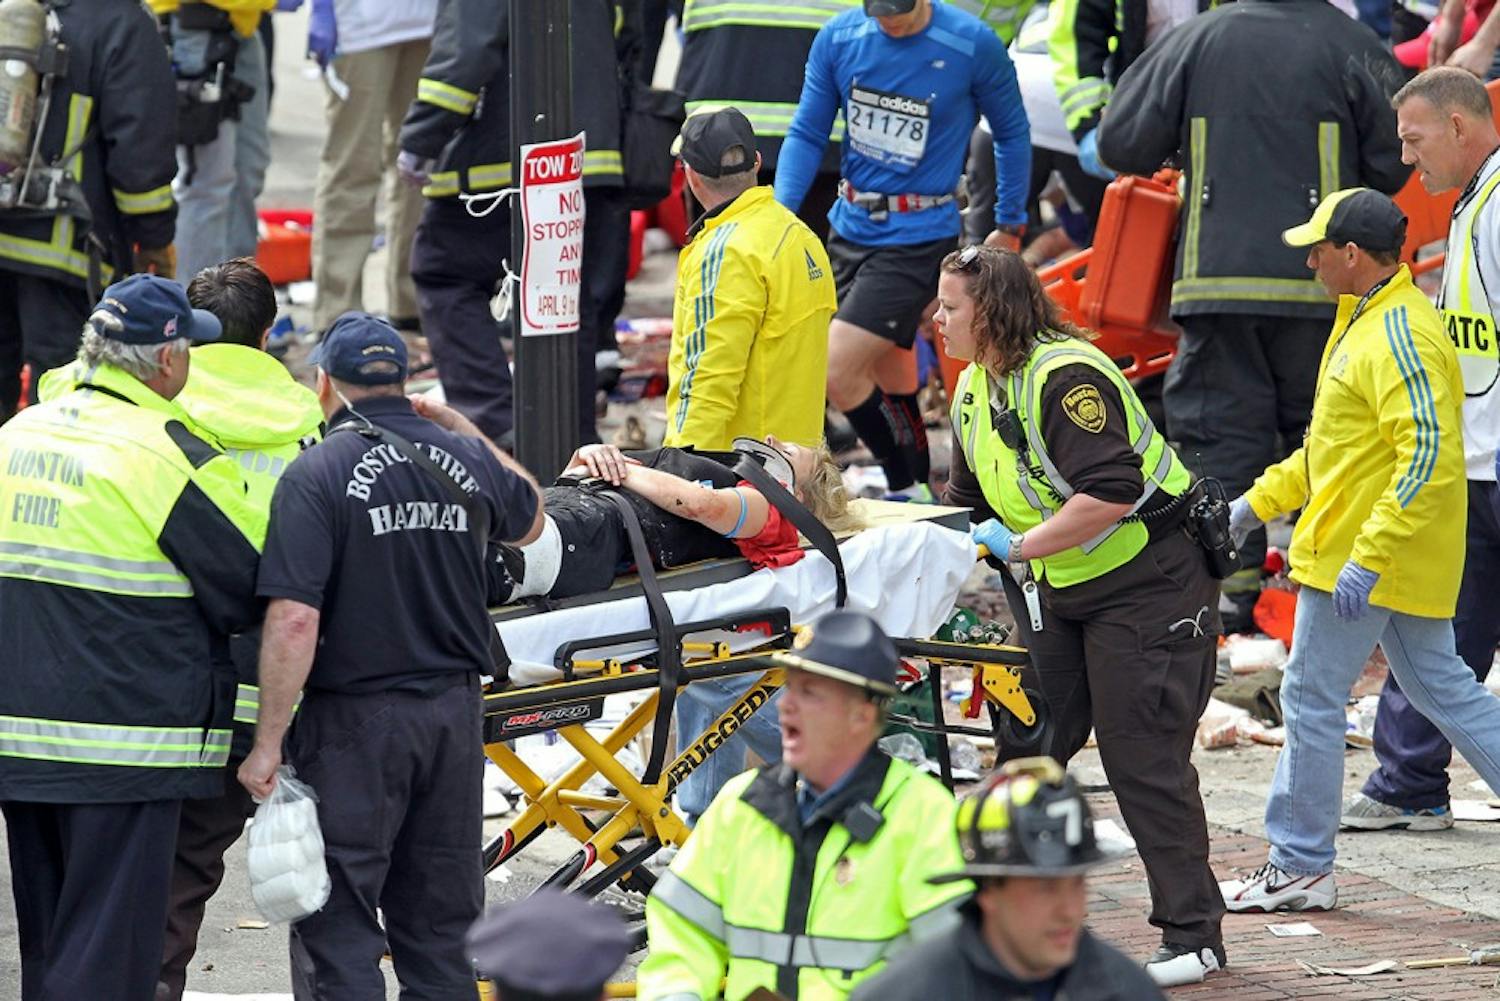 Emergency personnel assist the victims at the scene of a bomb blast during the Boston Marathon in Boston, Massachusetts, Monday, April 15, 2013. (Stuart Cahill/Boston Herald/MCT)